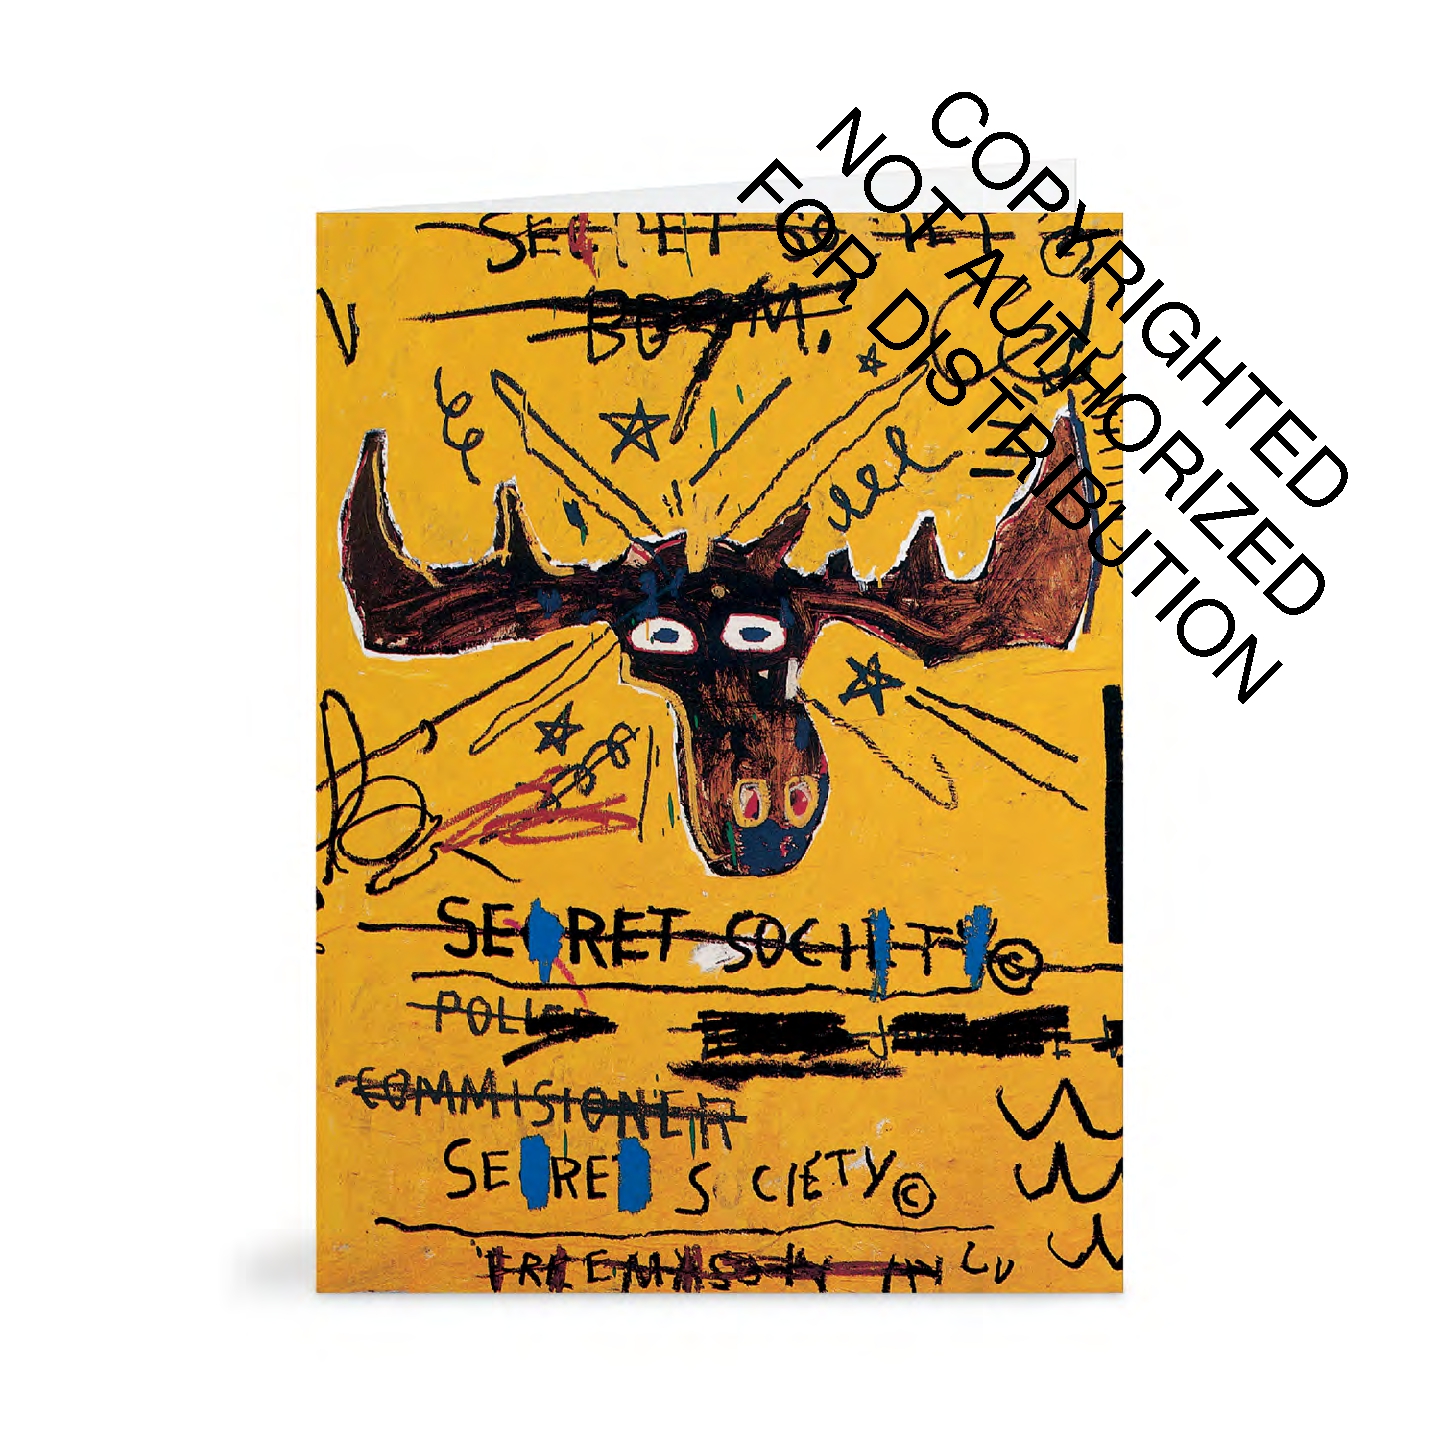 Basquiat Greeting Card Assortment